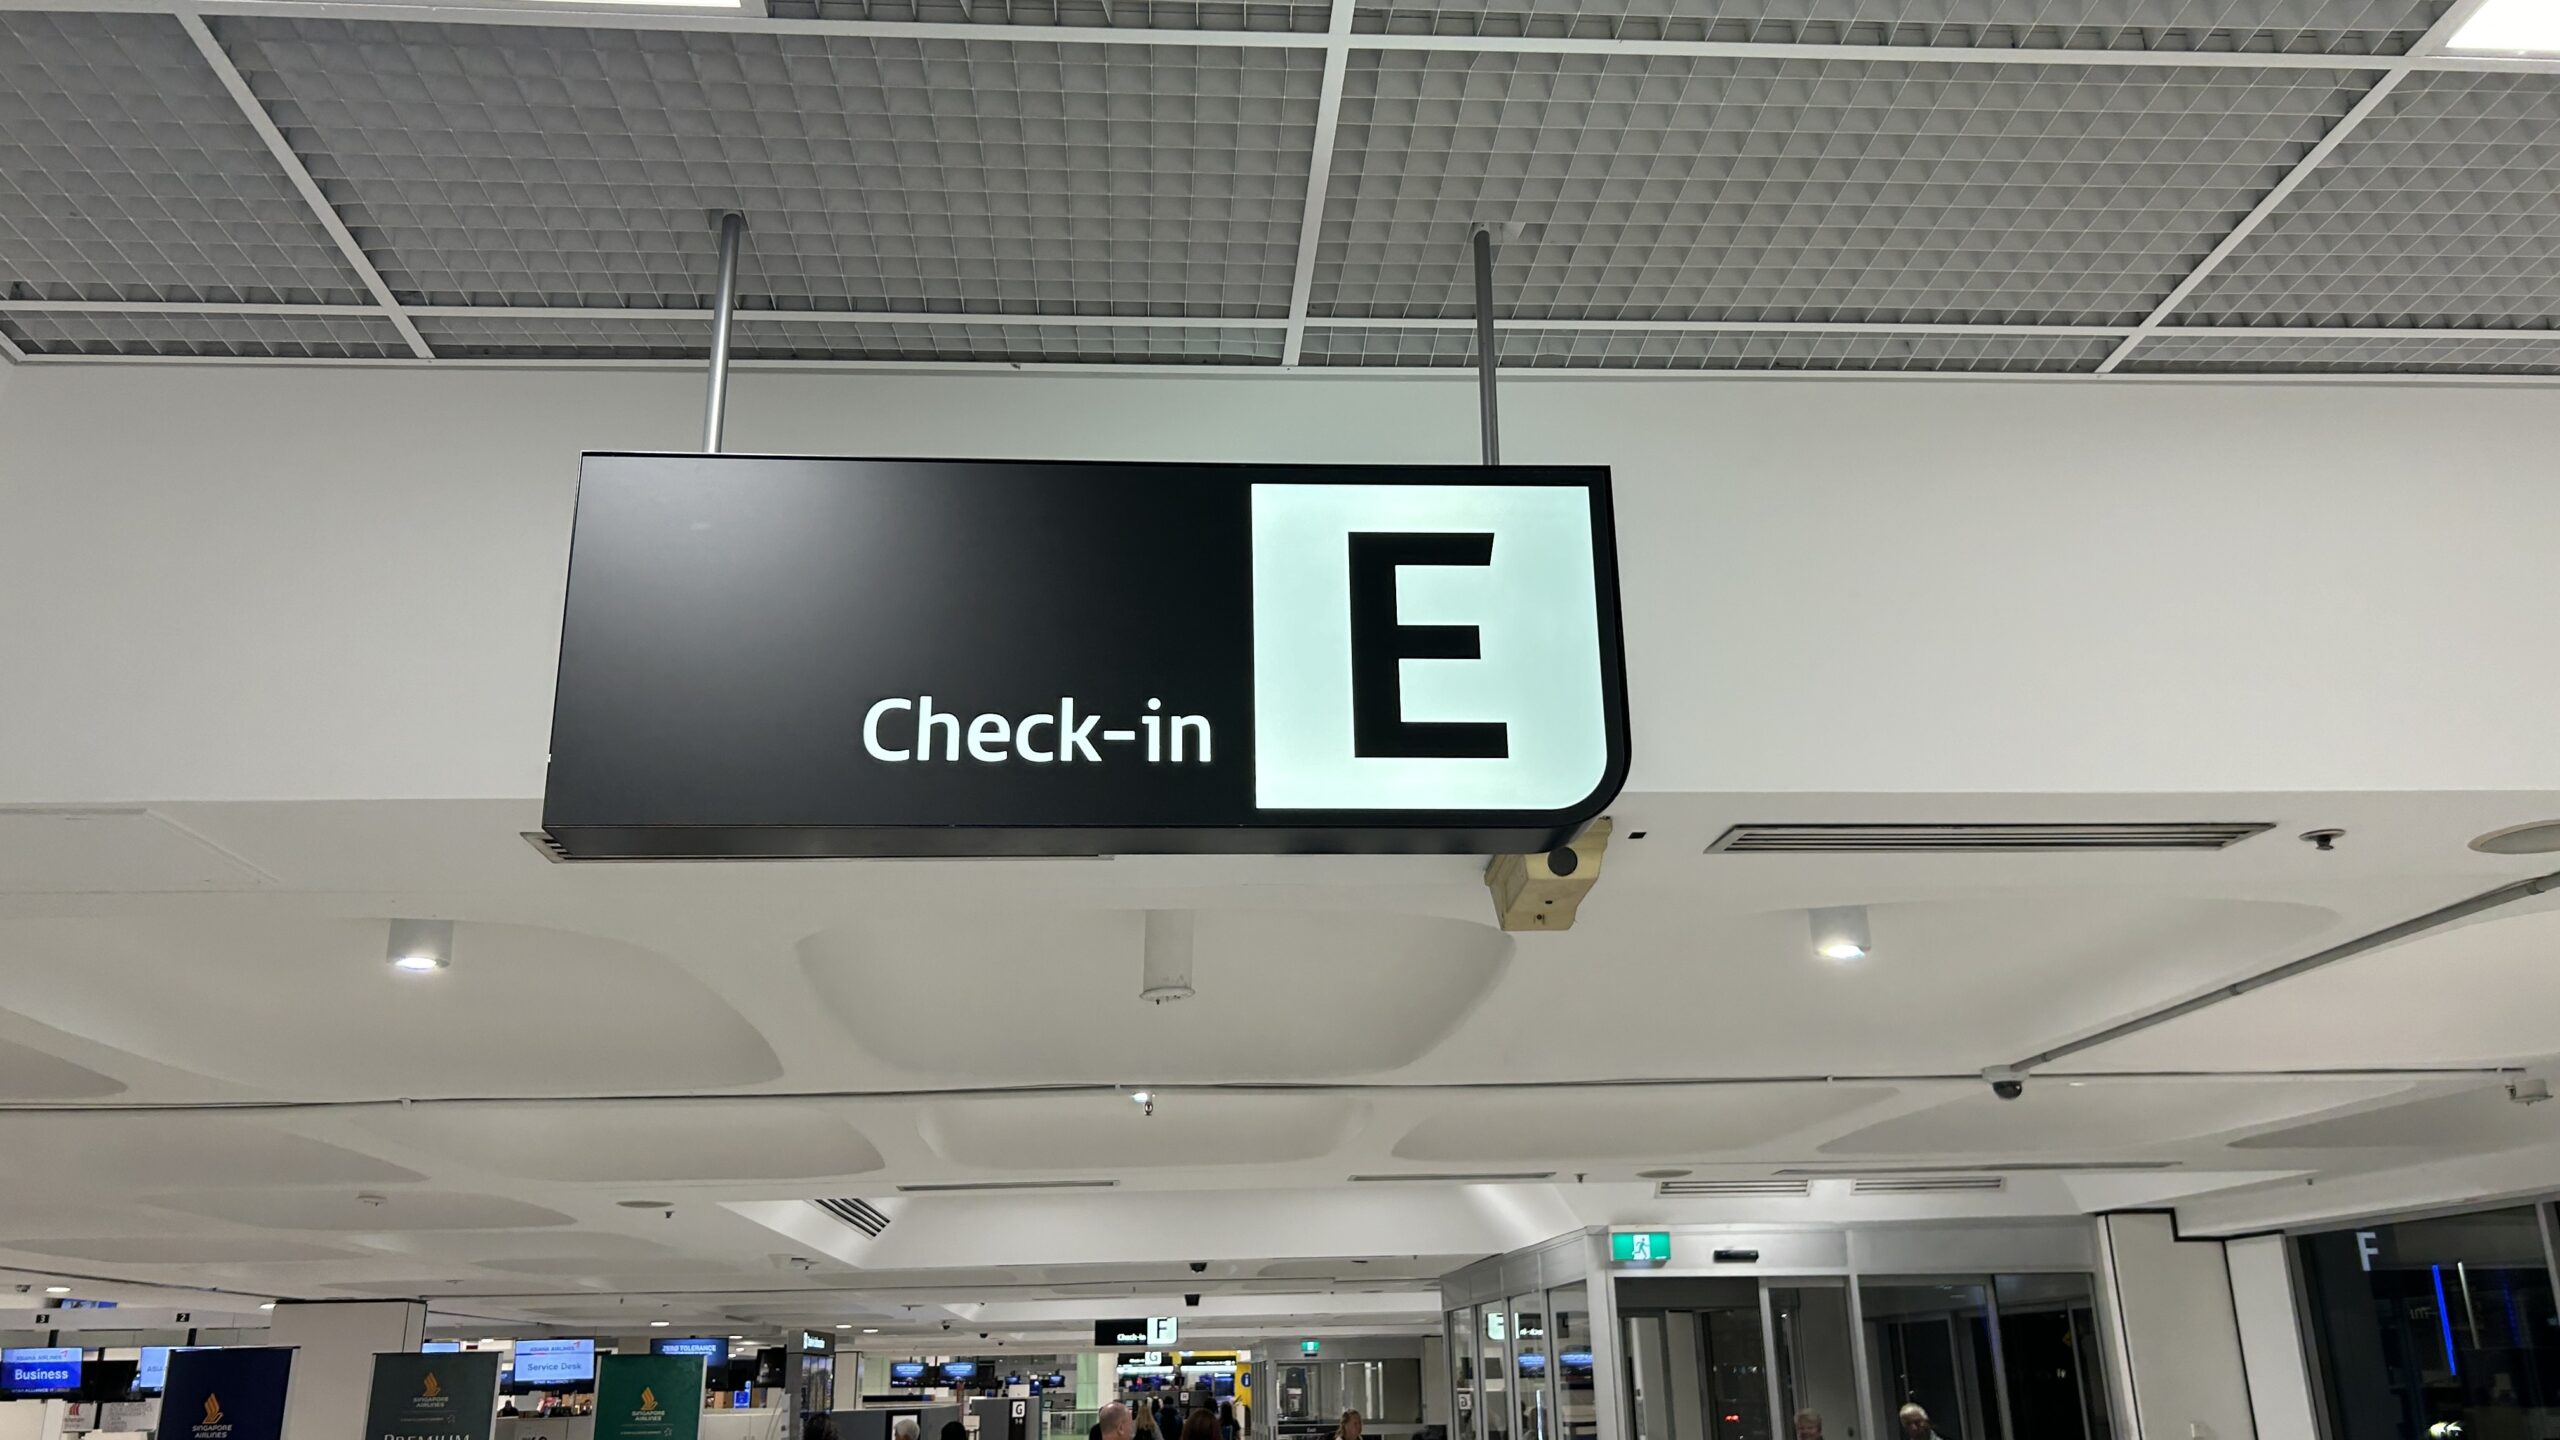 Singapore Airlines Premium Economy B777 Sydney Check-in-E-sign